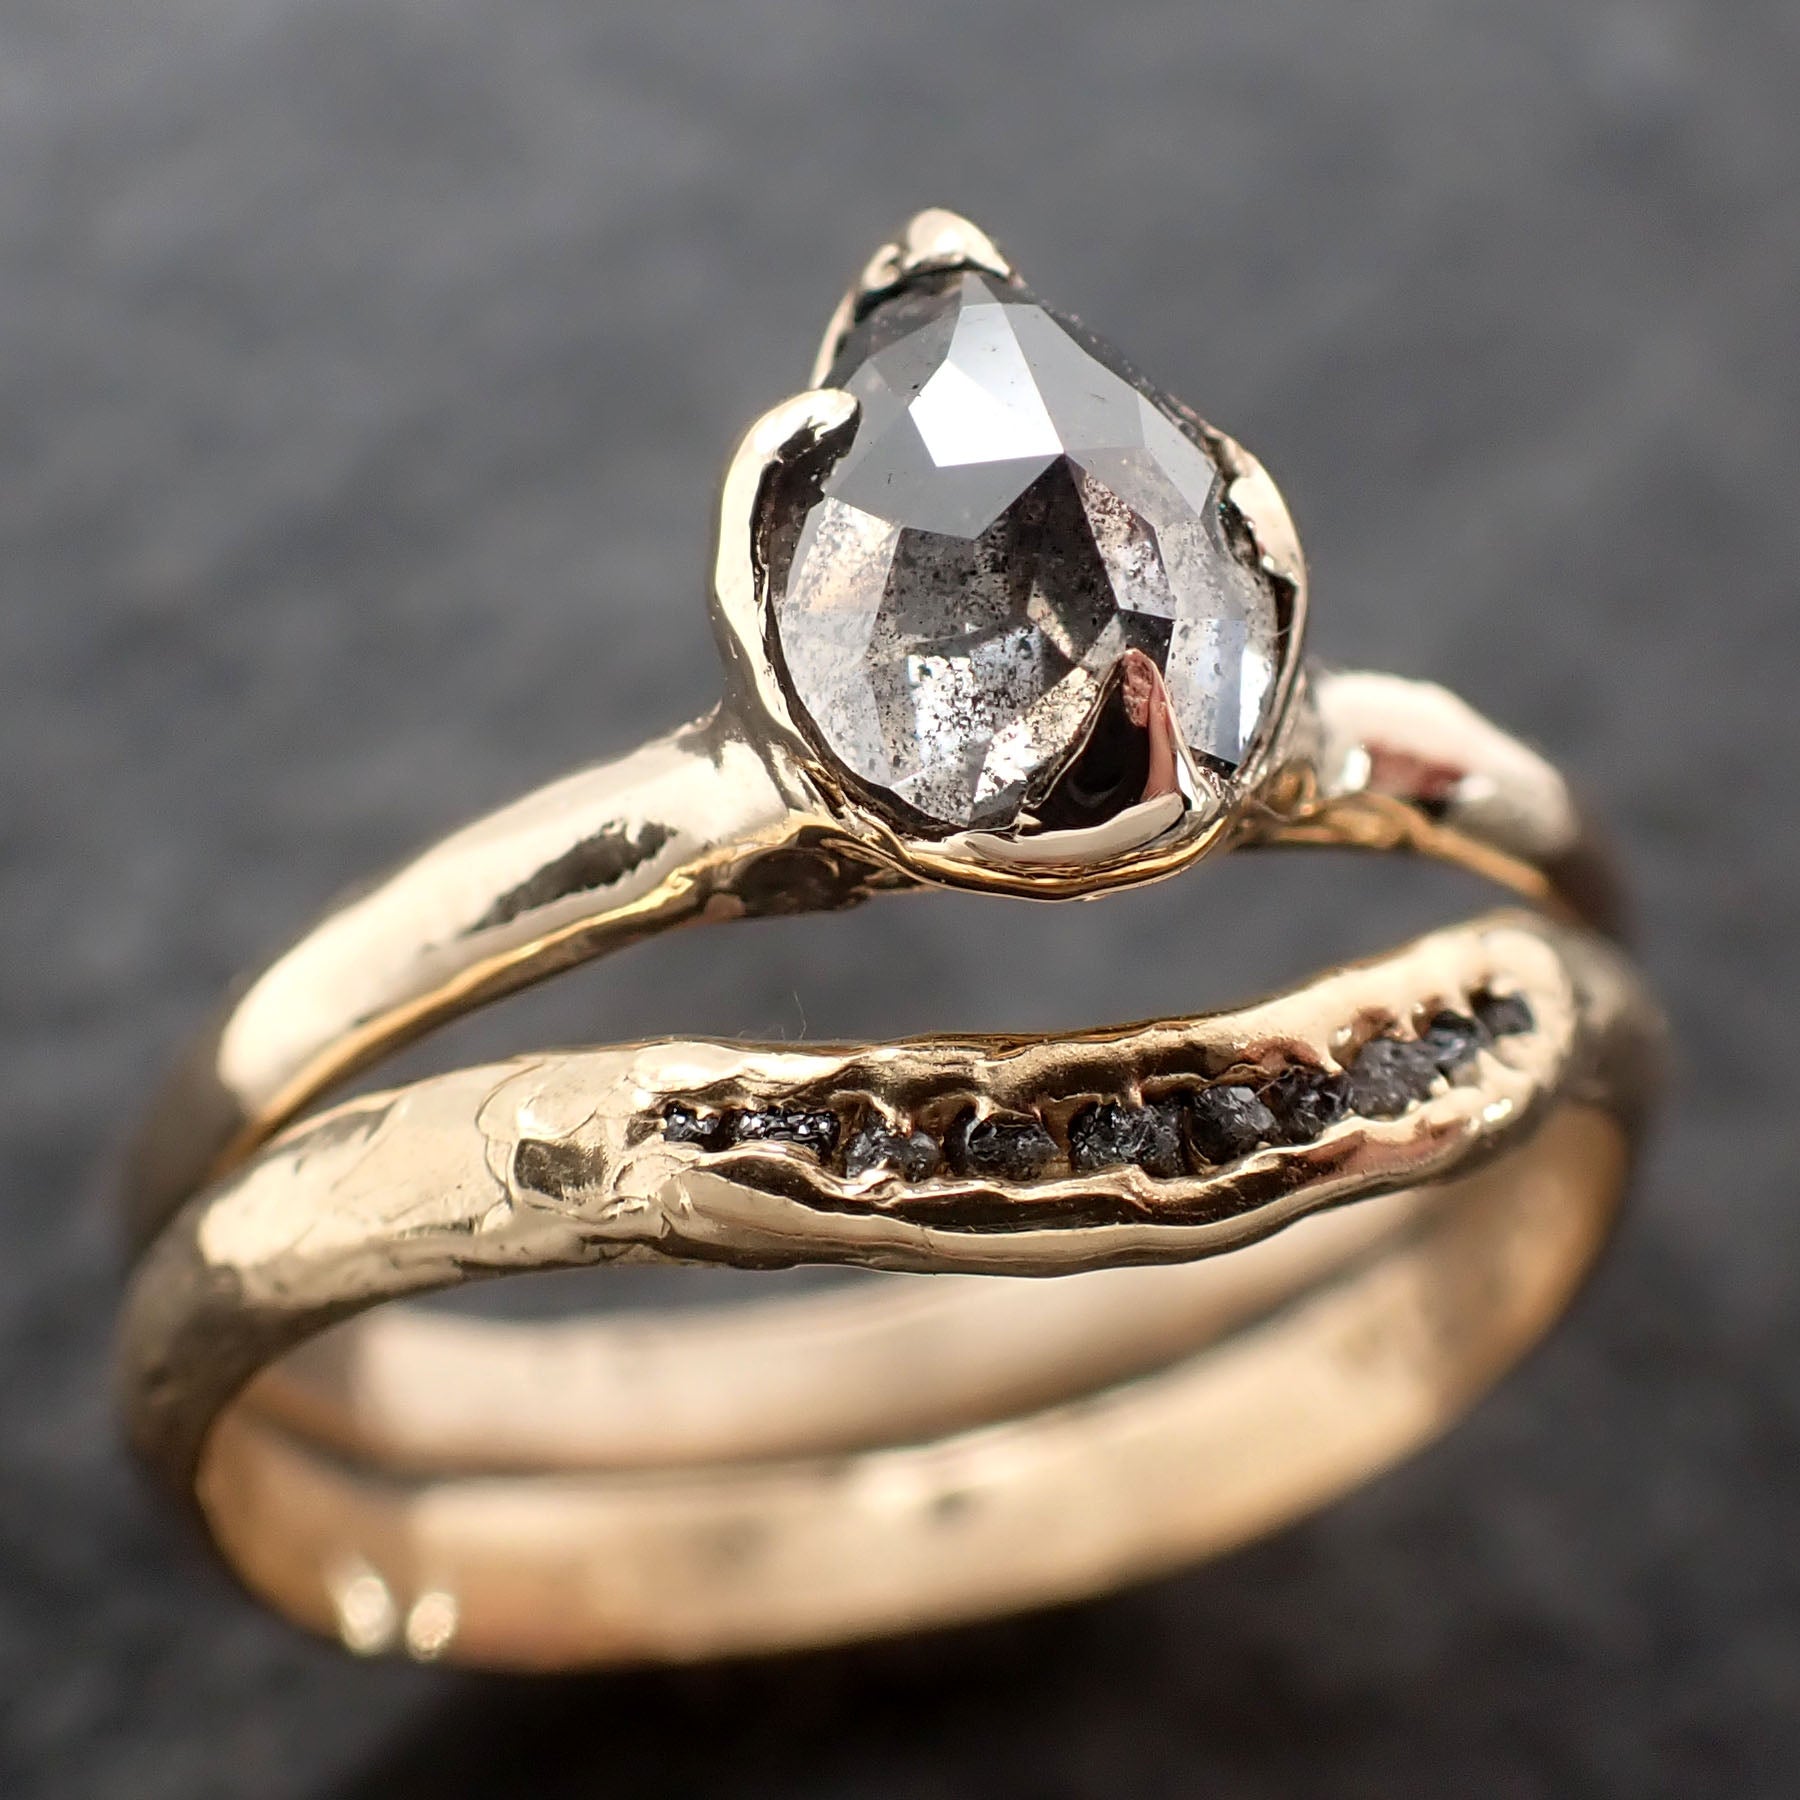 fancy cut salt and pepper diamond solitaire engagement 14k yellow gold wedding ring byangeline 2604 Alternative Engagement